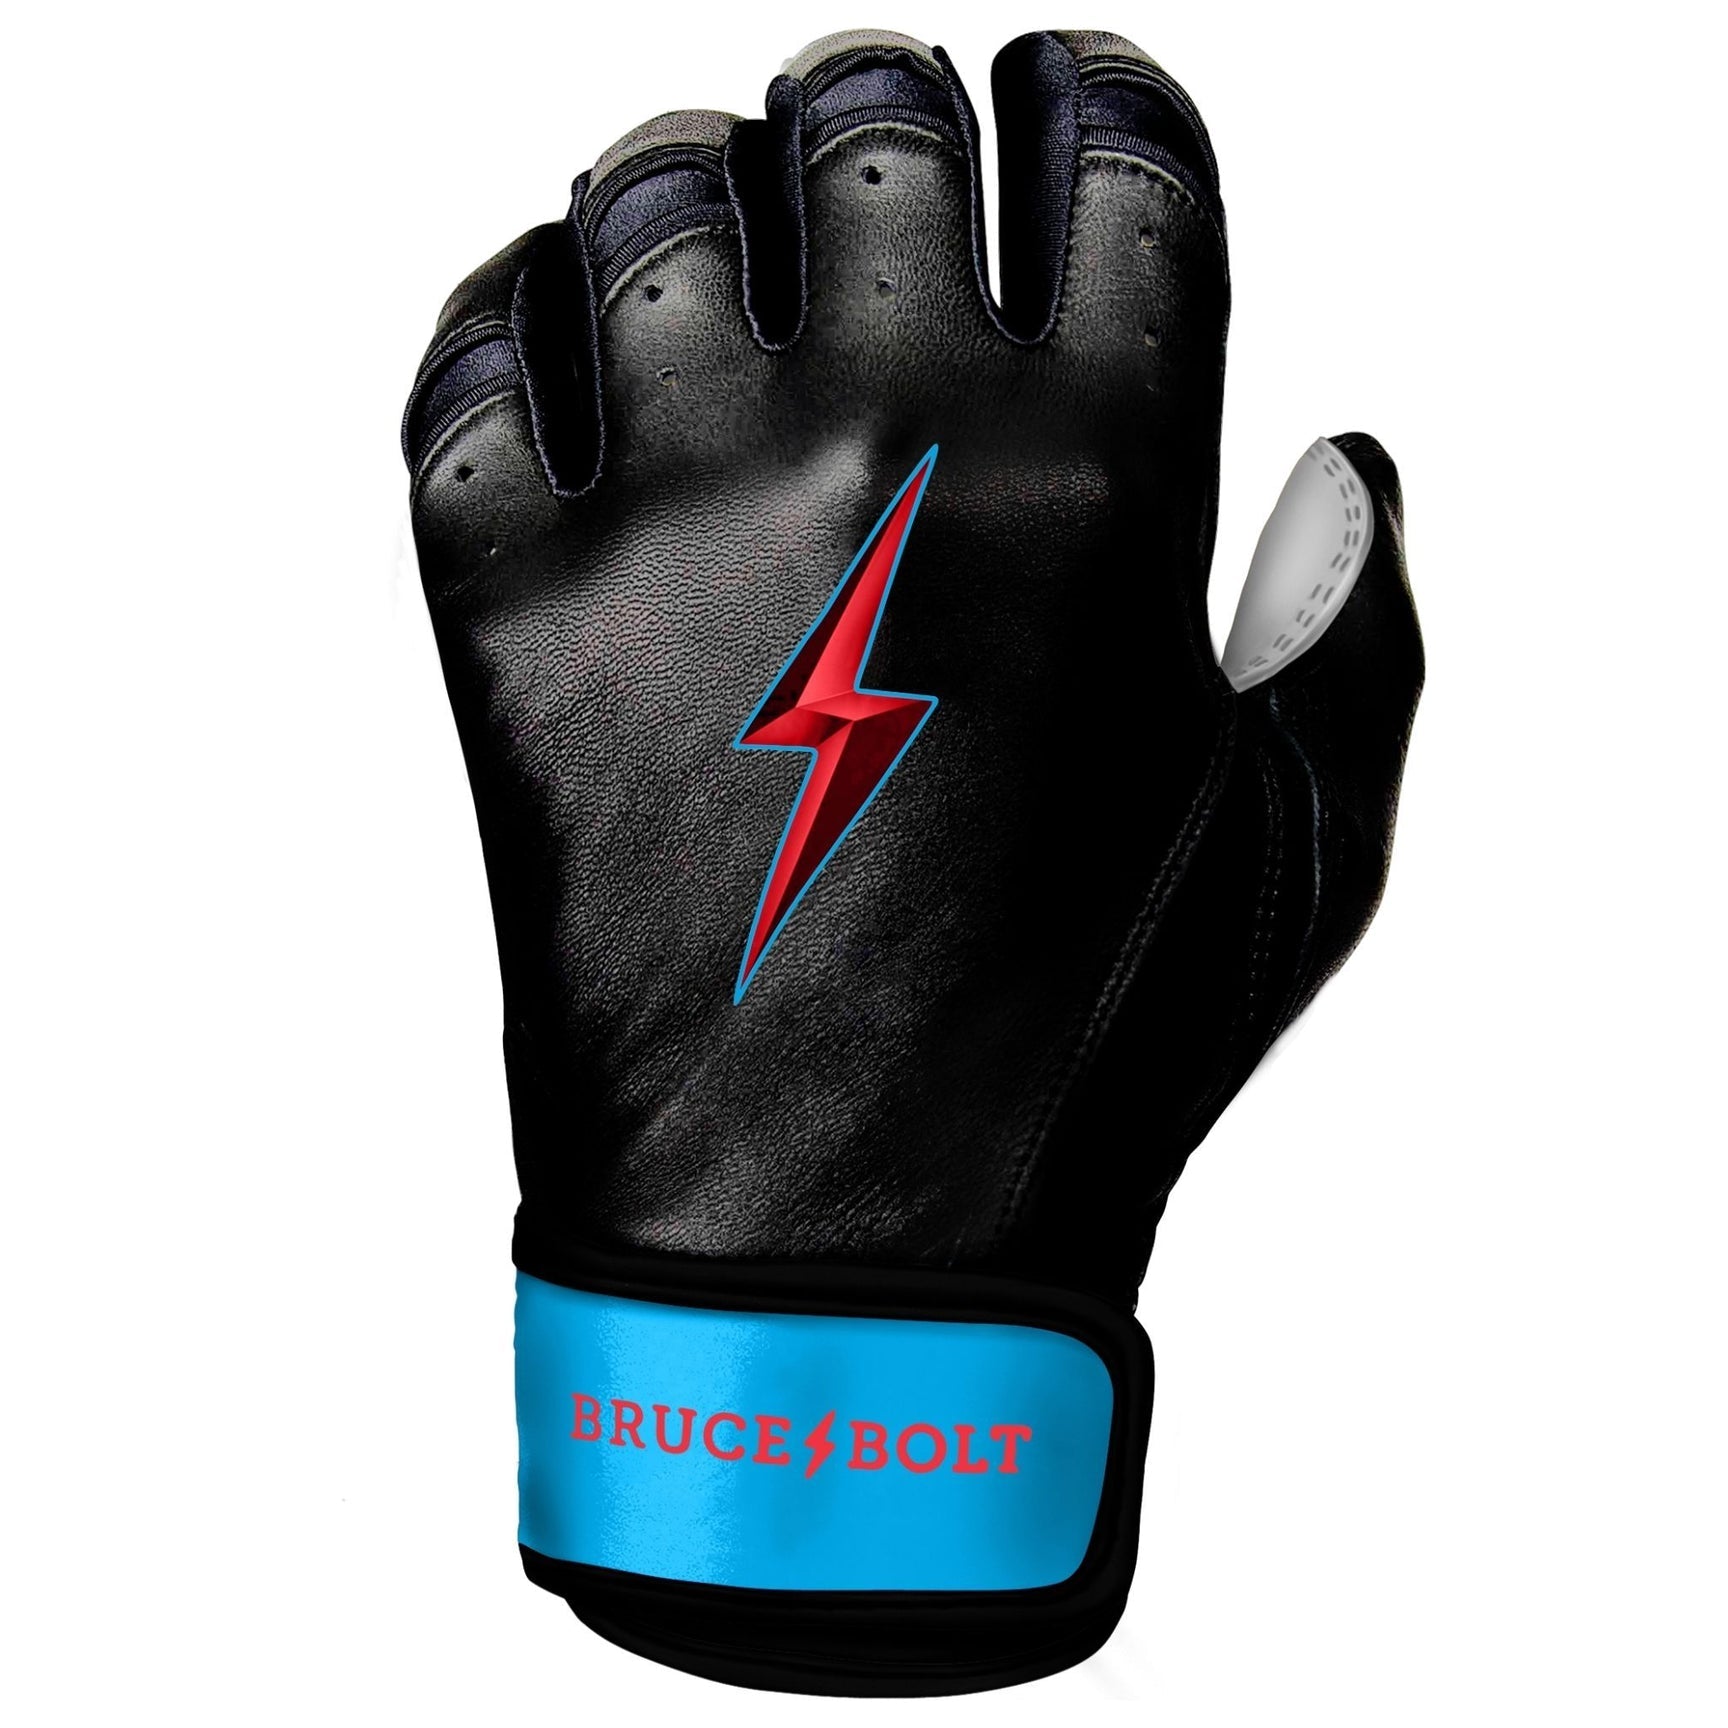 Bruce Bolt Premium Pro Brinson Series Short Cuff Batting  Gloves Black